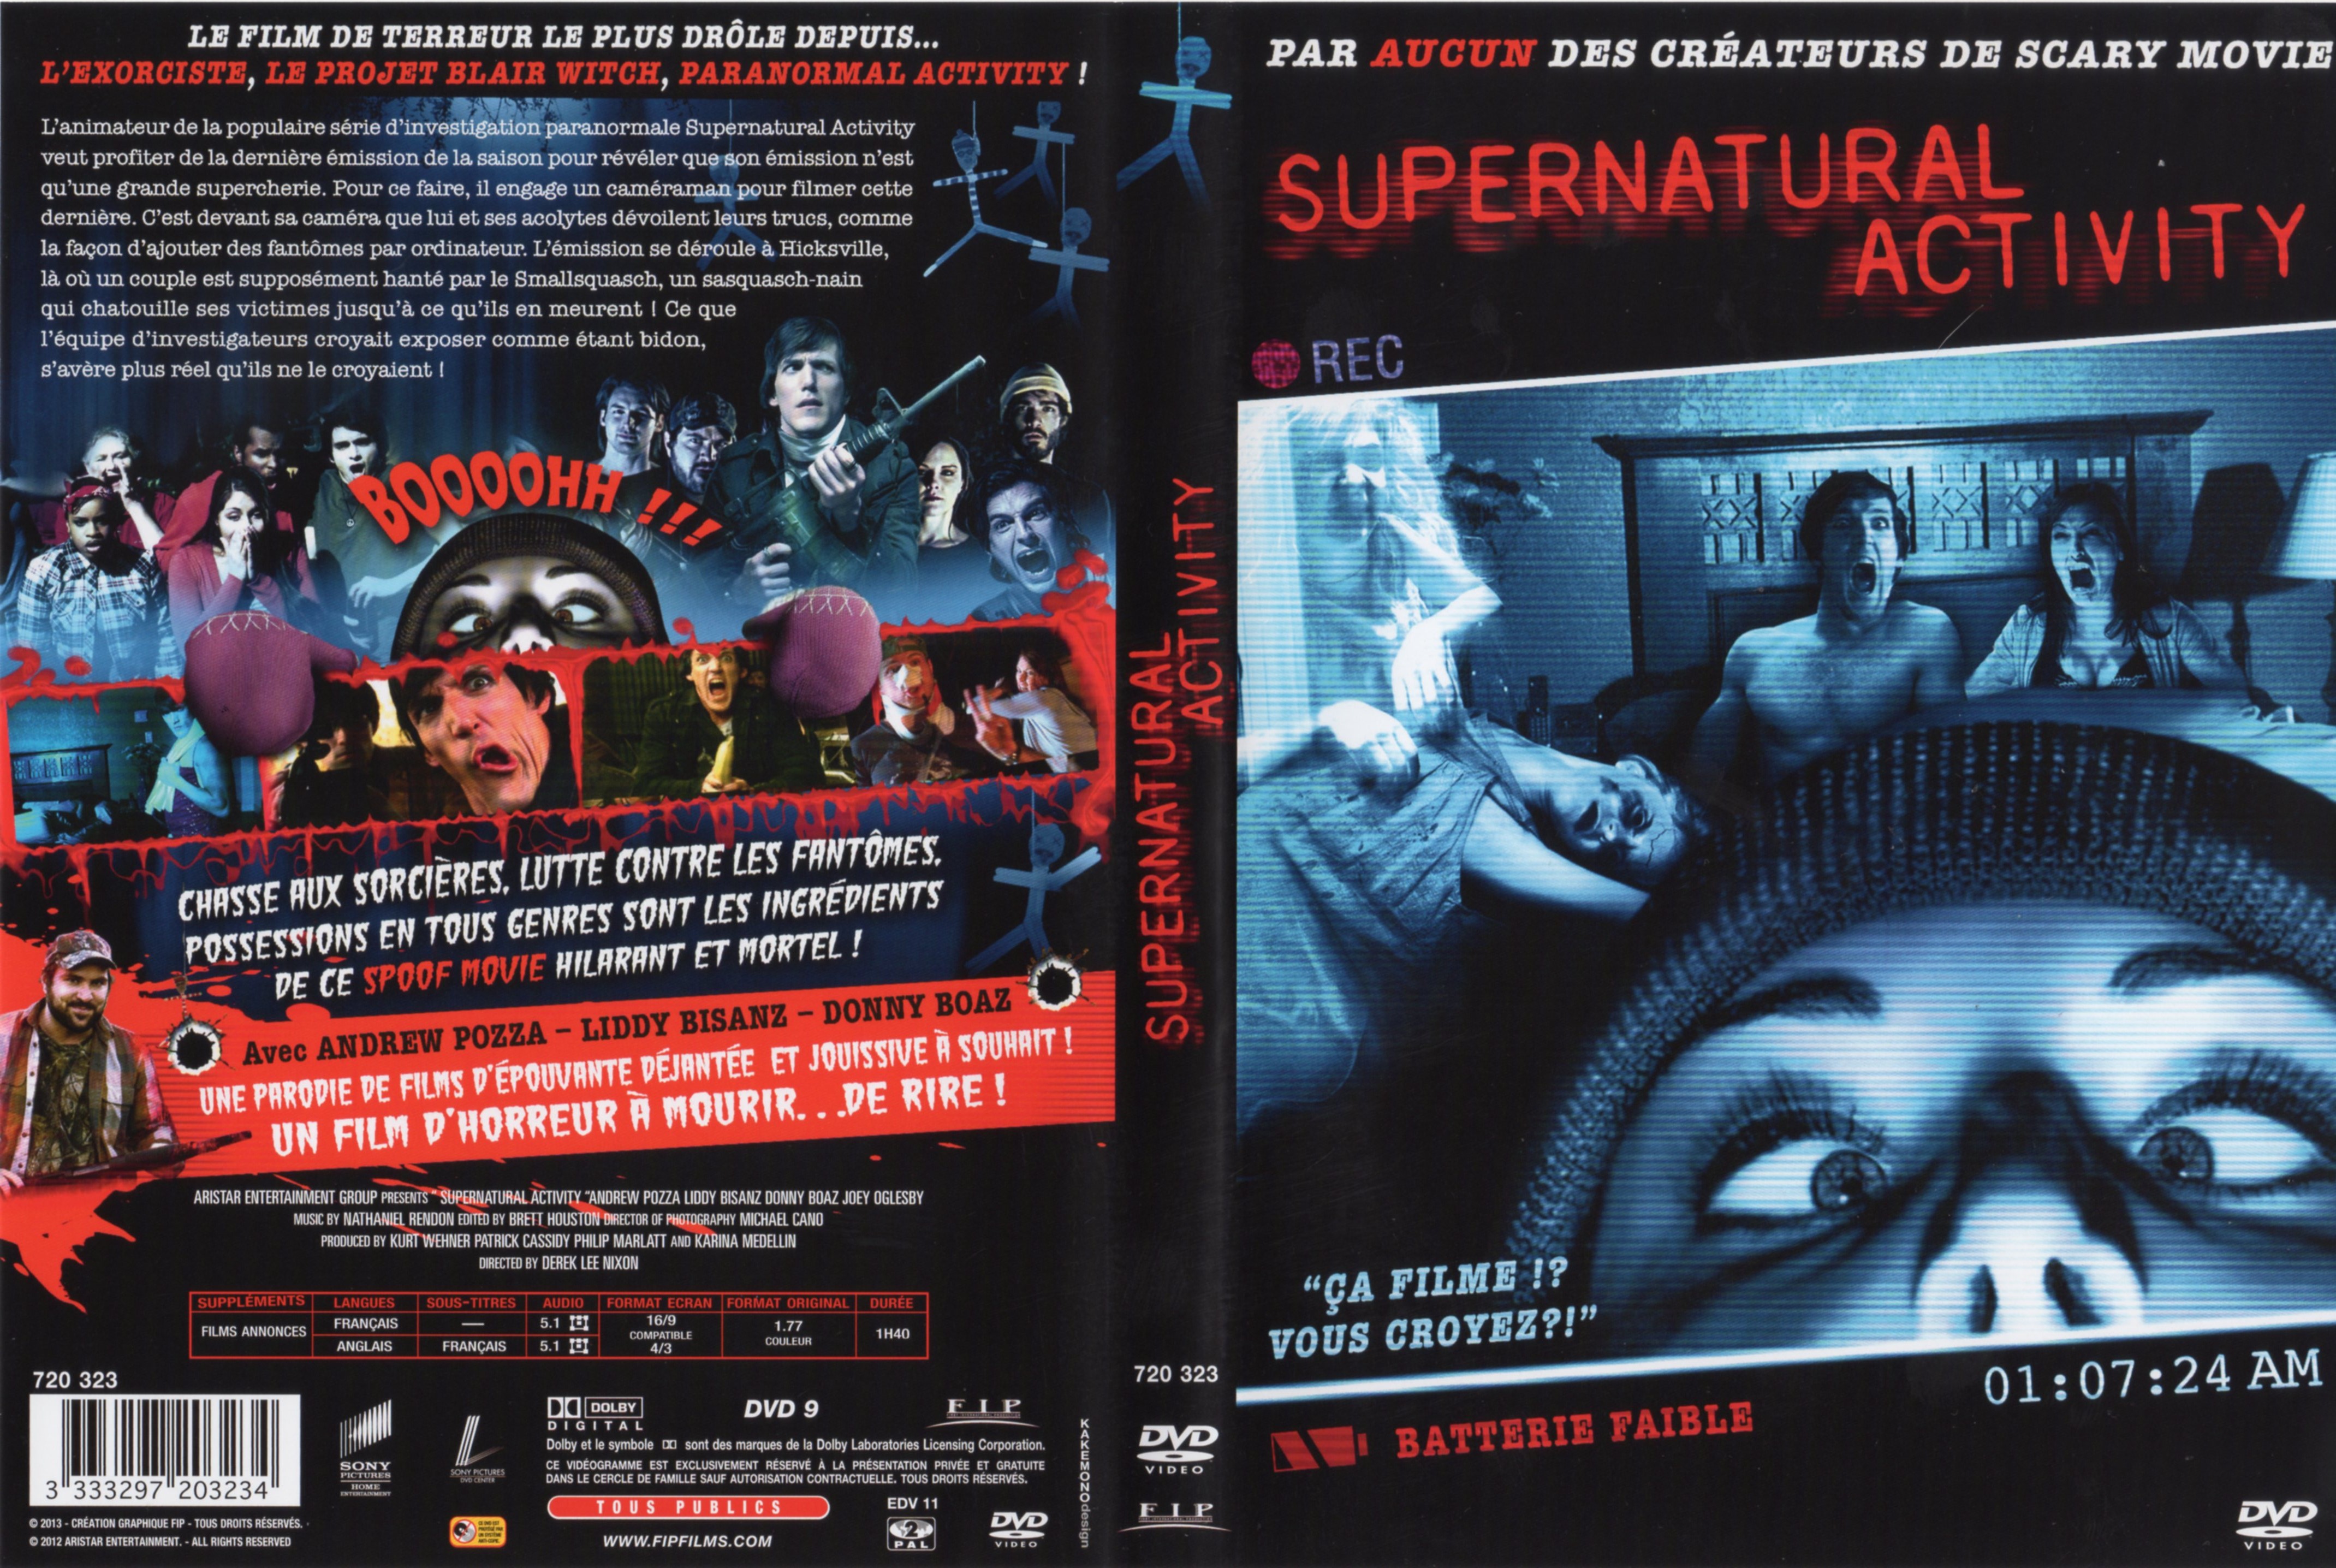 Jaquette DVD Supernatural activity